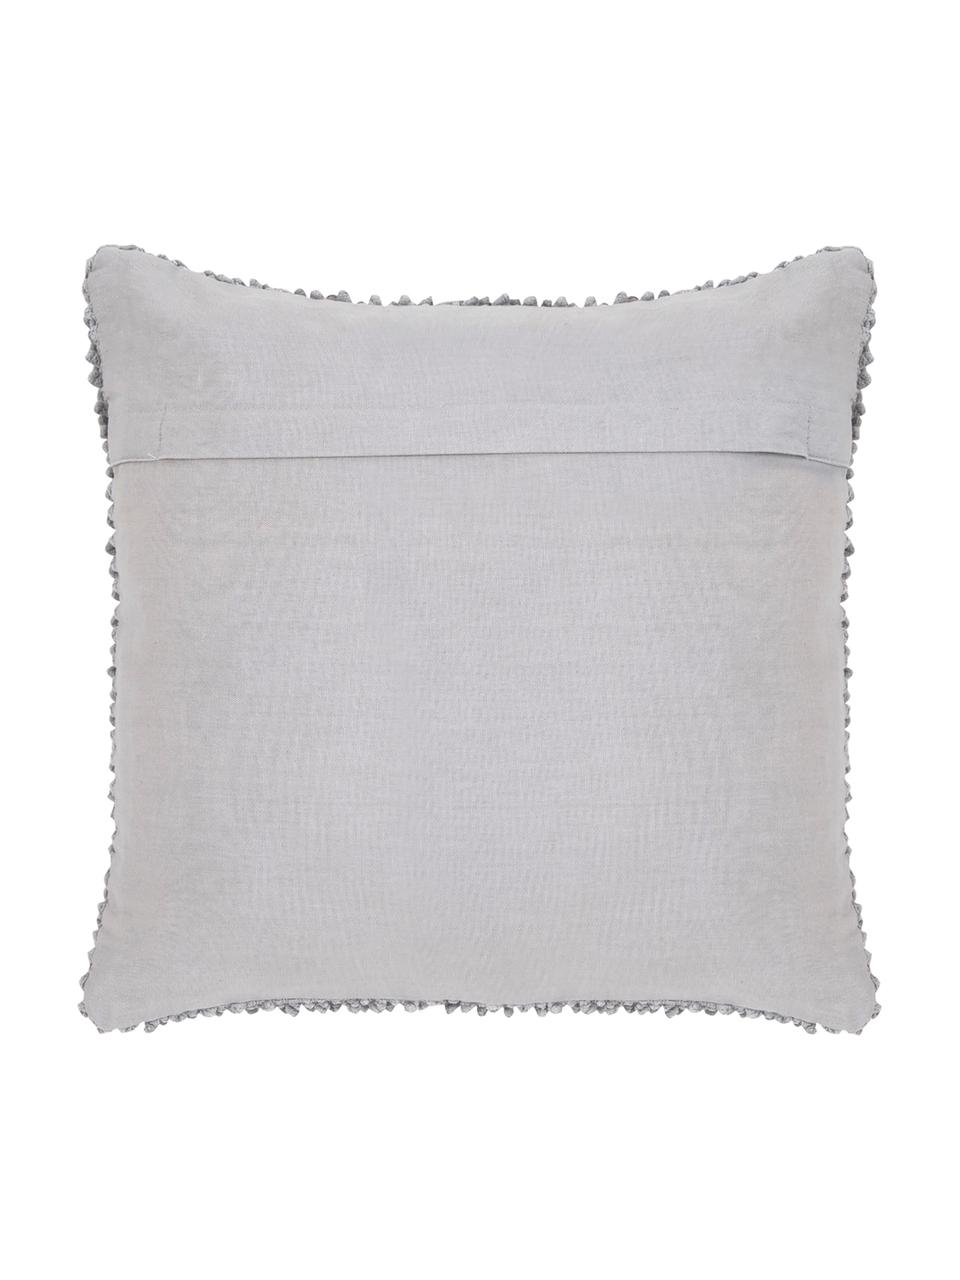 Poszewka na poduszkę Indi, 100% bawełna, Jasny szary, S 45 x D 45 cm